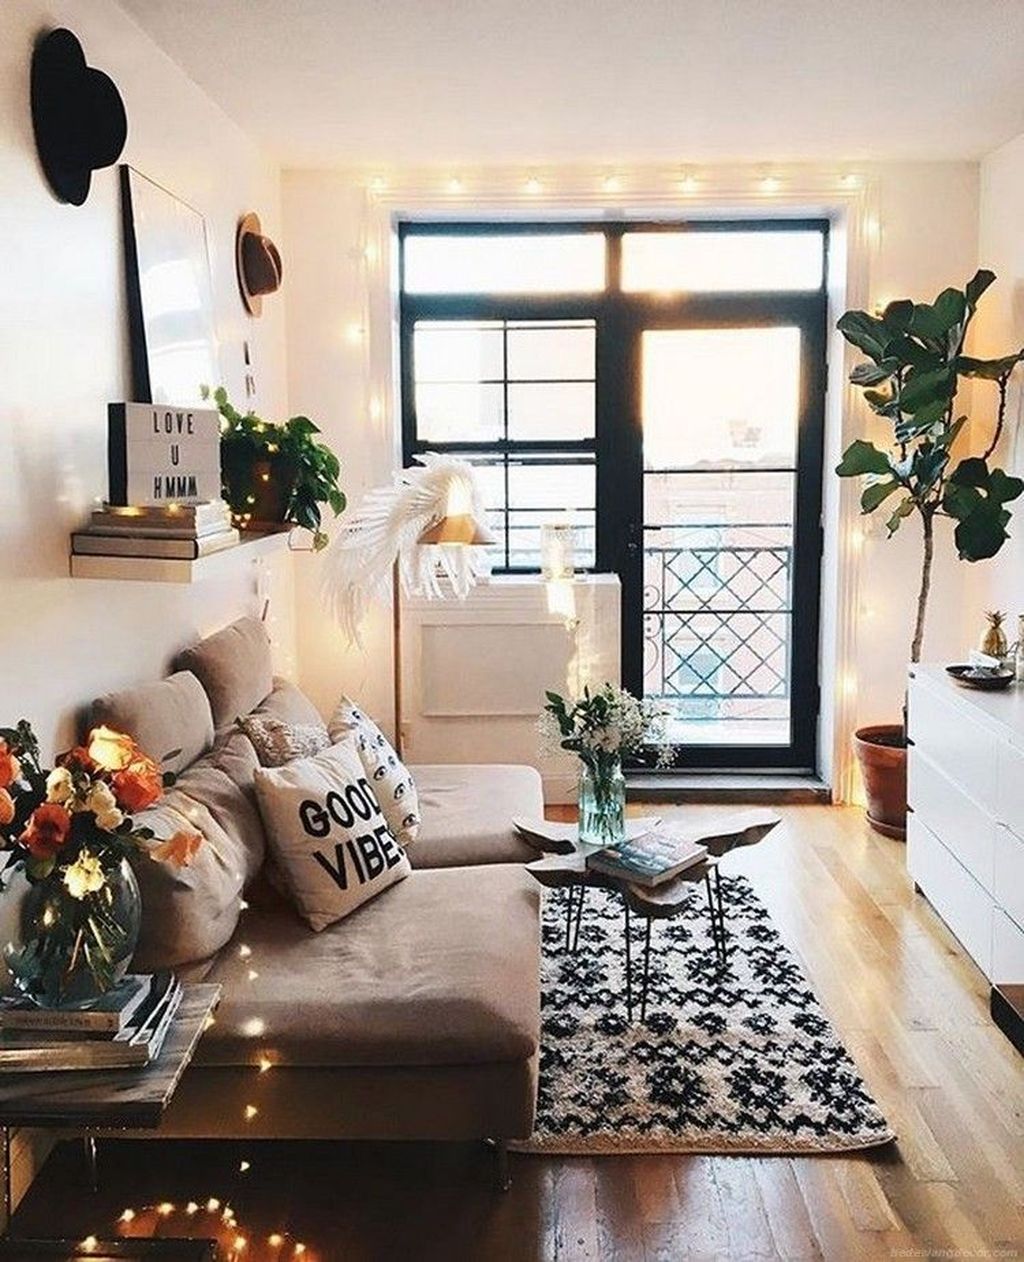 34 The Best Rustic Bohemian Living Room Decor Ideas – Homyhomee Regarding Cozy Castle Boho Living Room Tables (Gallery 4 of 20)